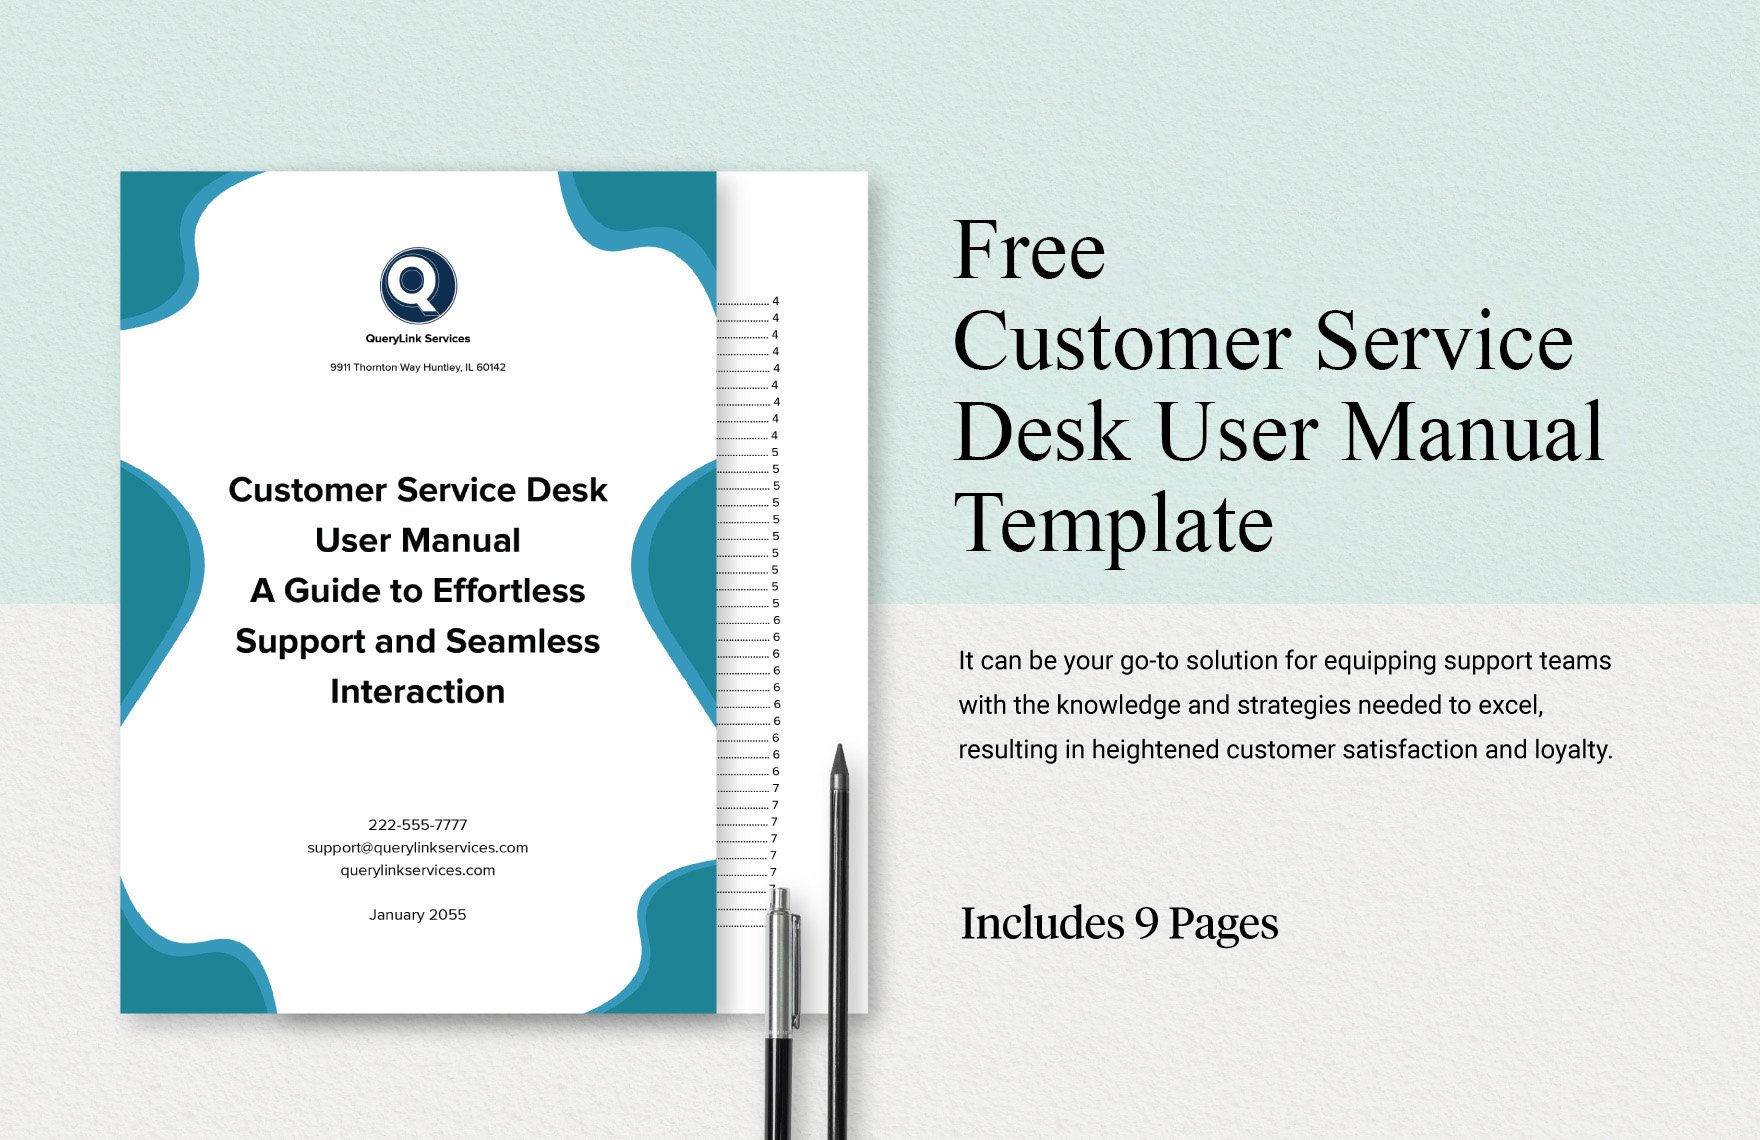 Free Customer Service Desk User Manual Template in Word, Google Docs, PDF